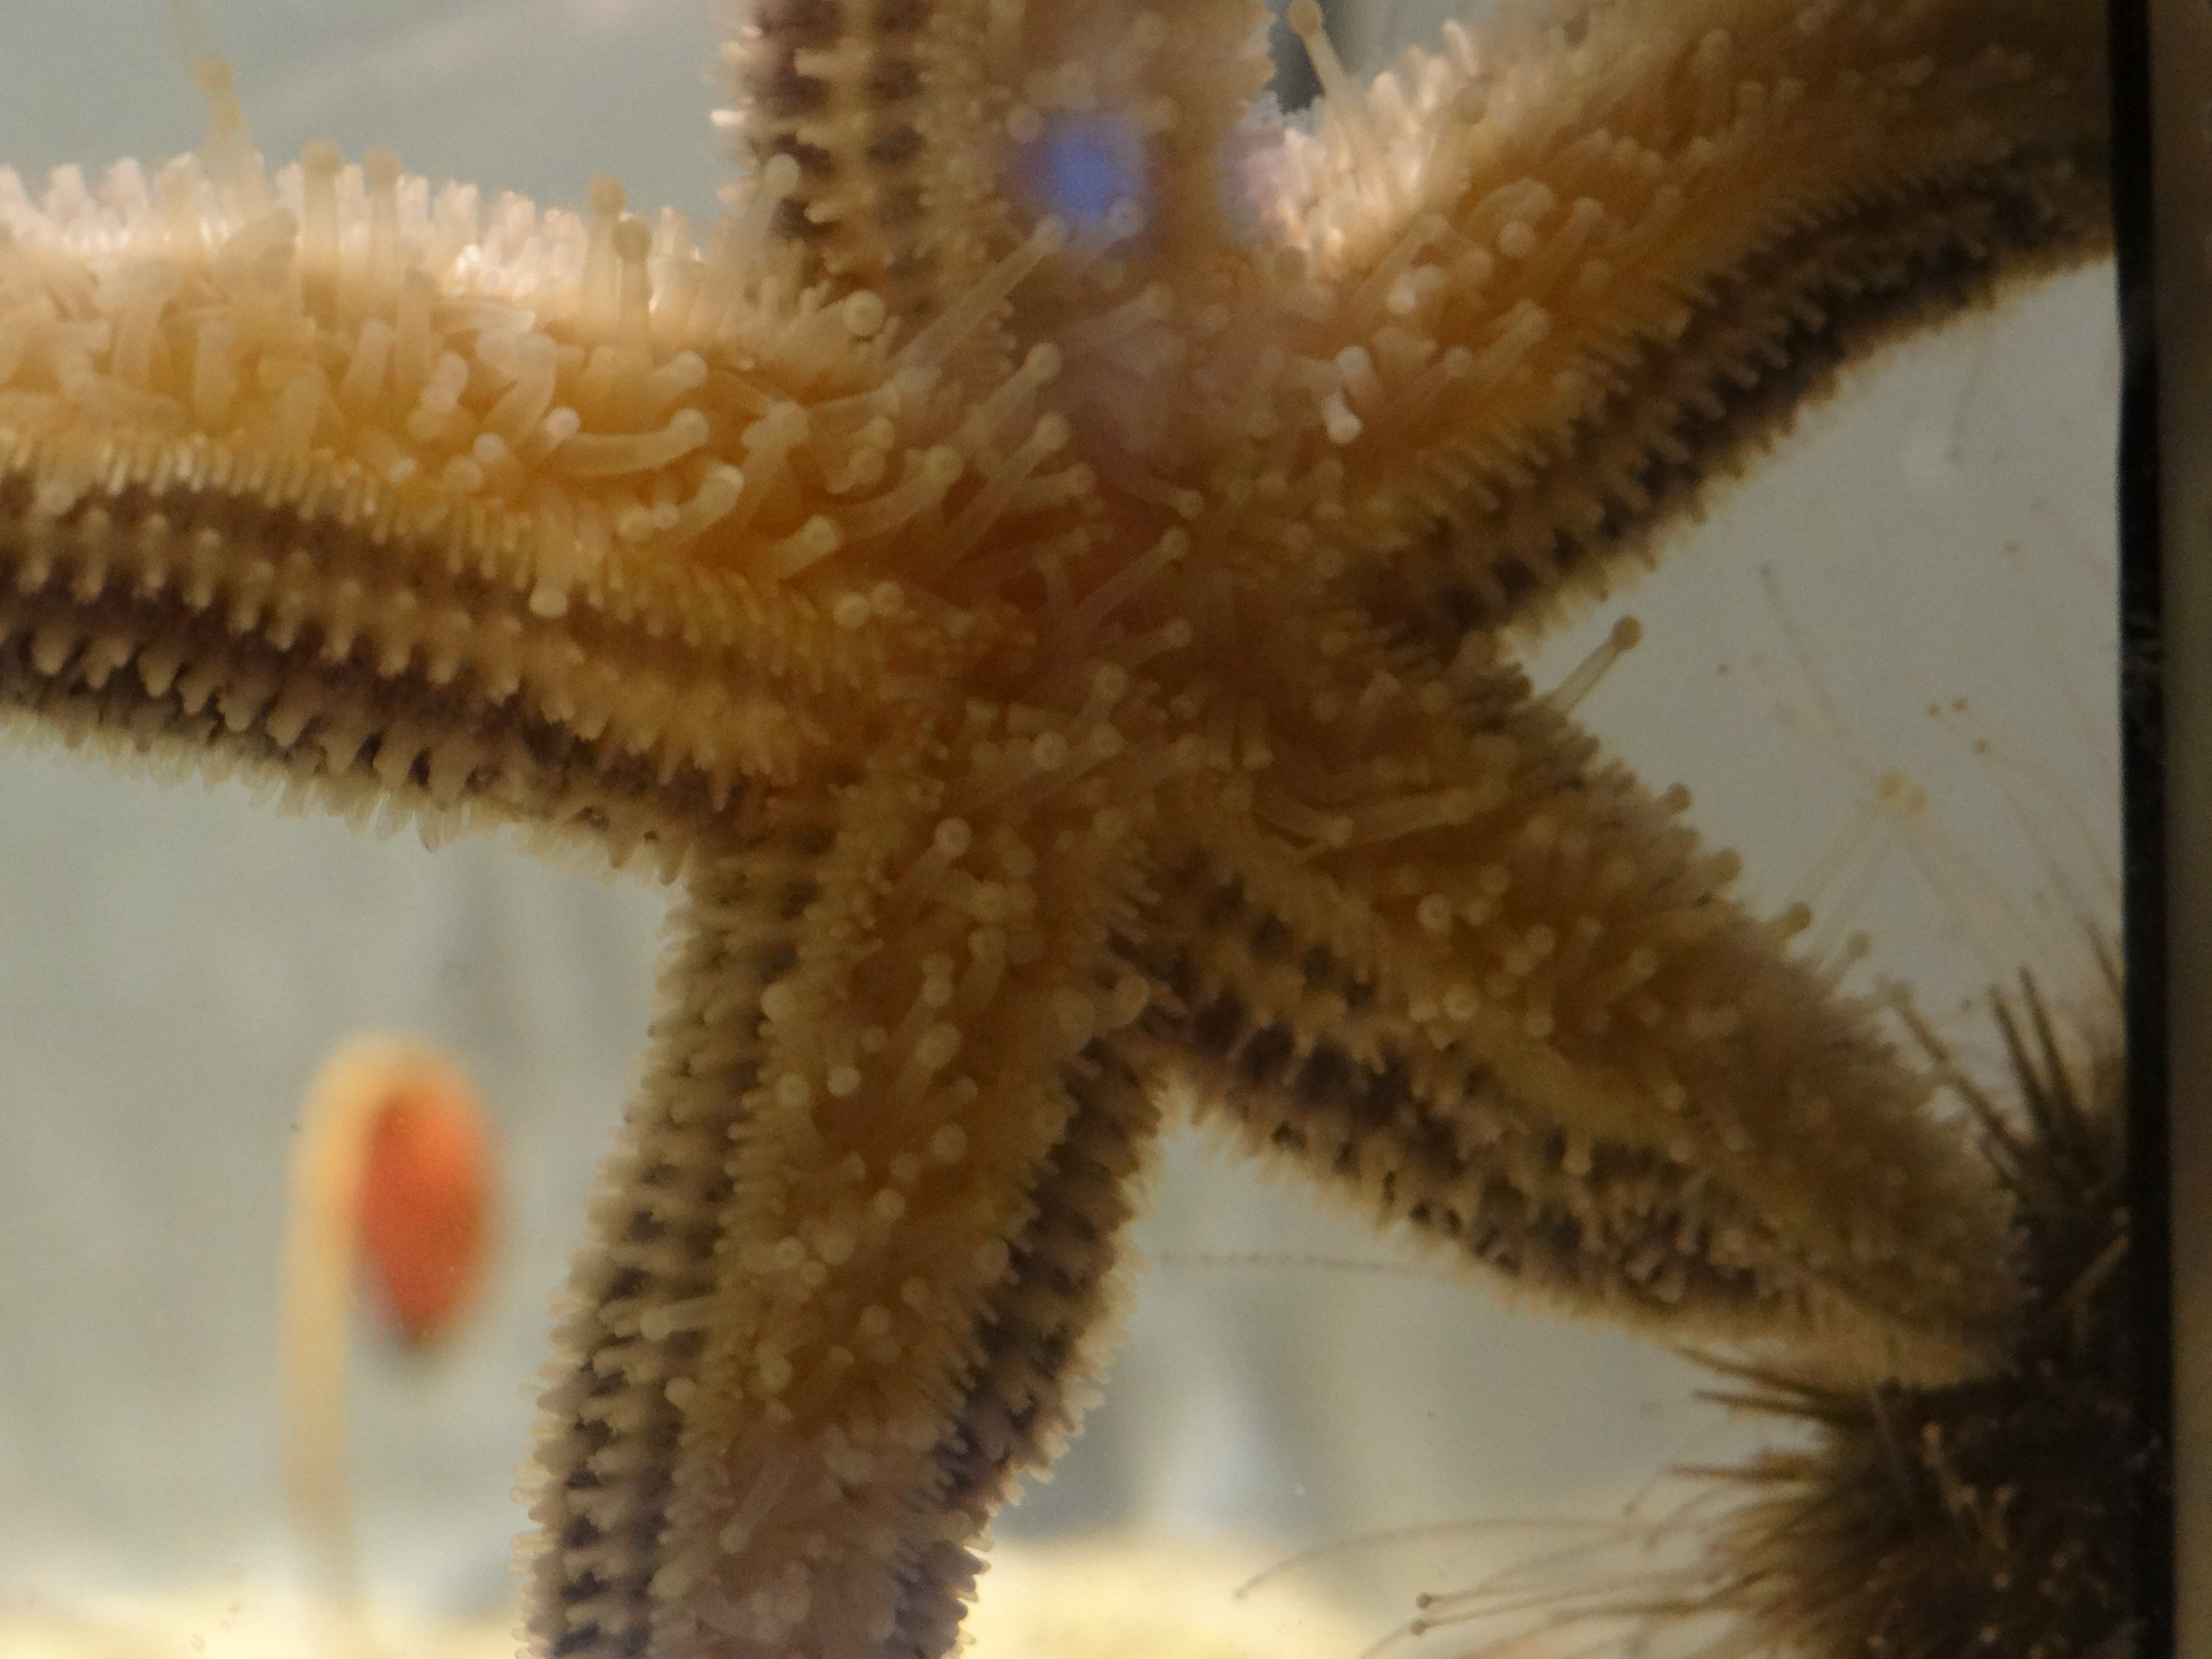 Sea star, underside